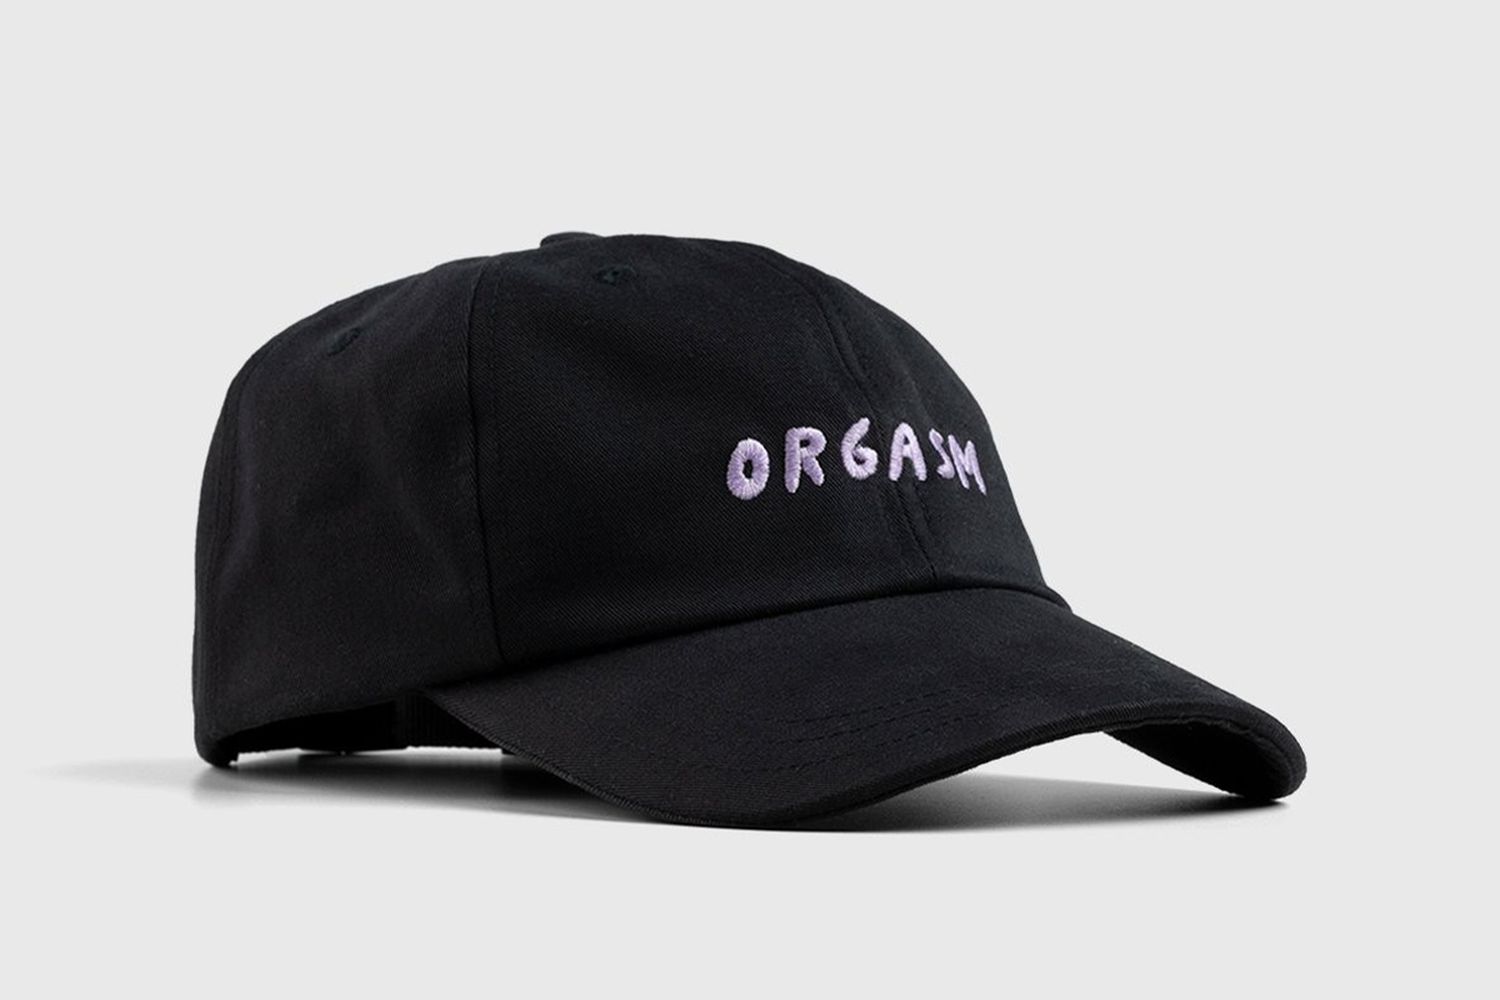 The Final Orgasm Cap